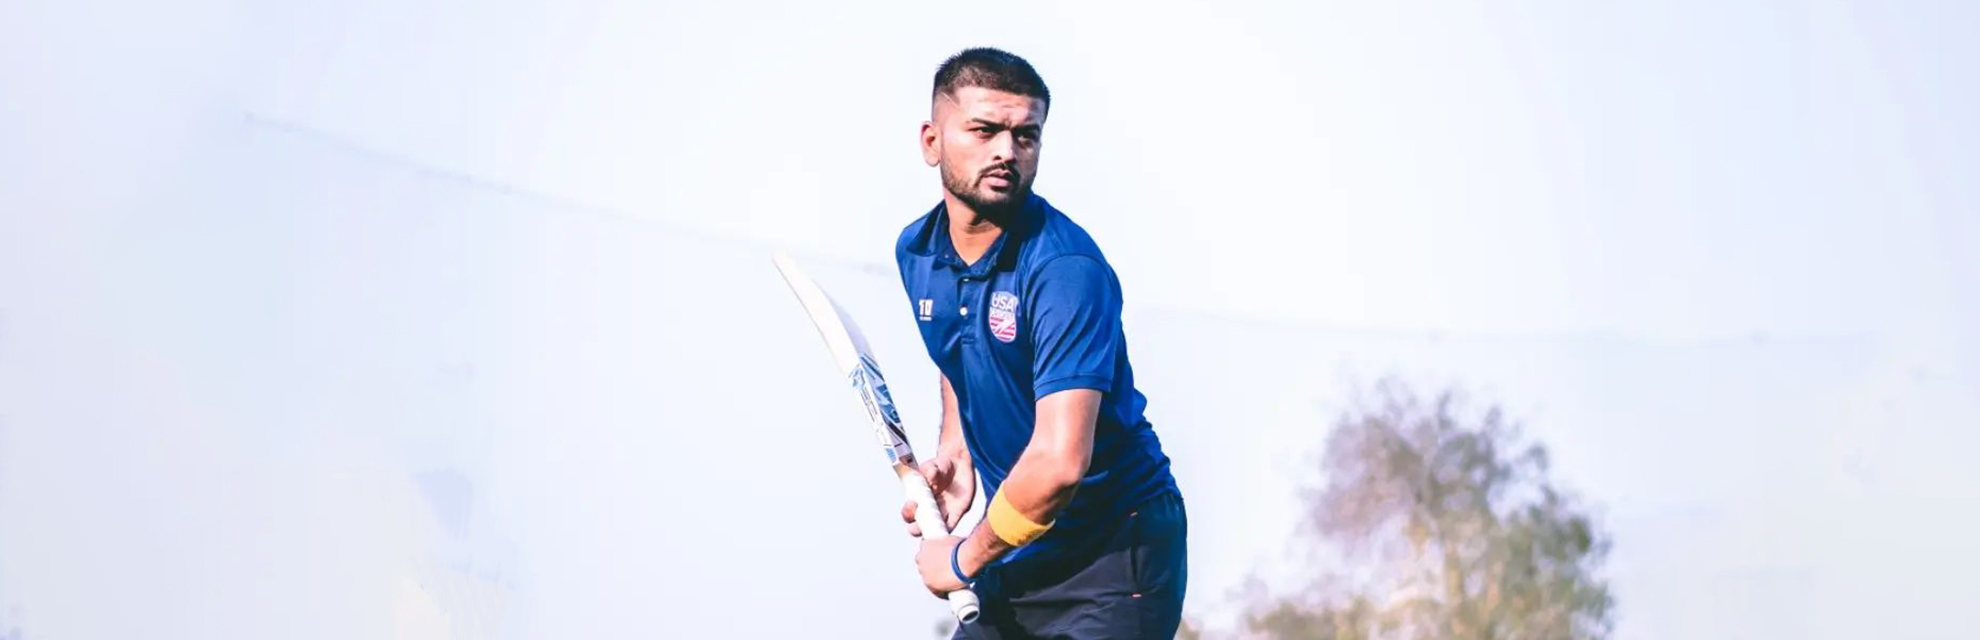 Cricketer | Monank Patel | Global Indian